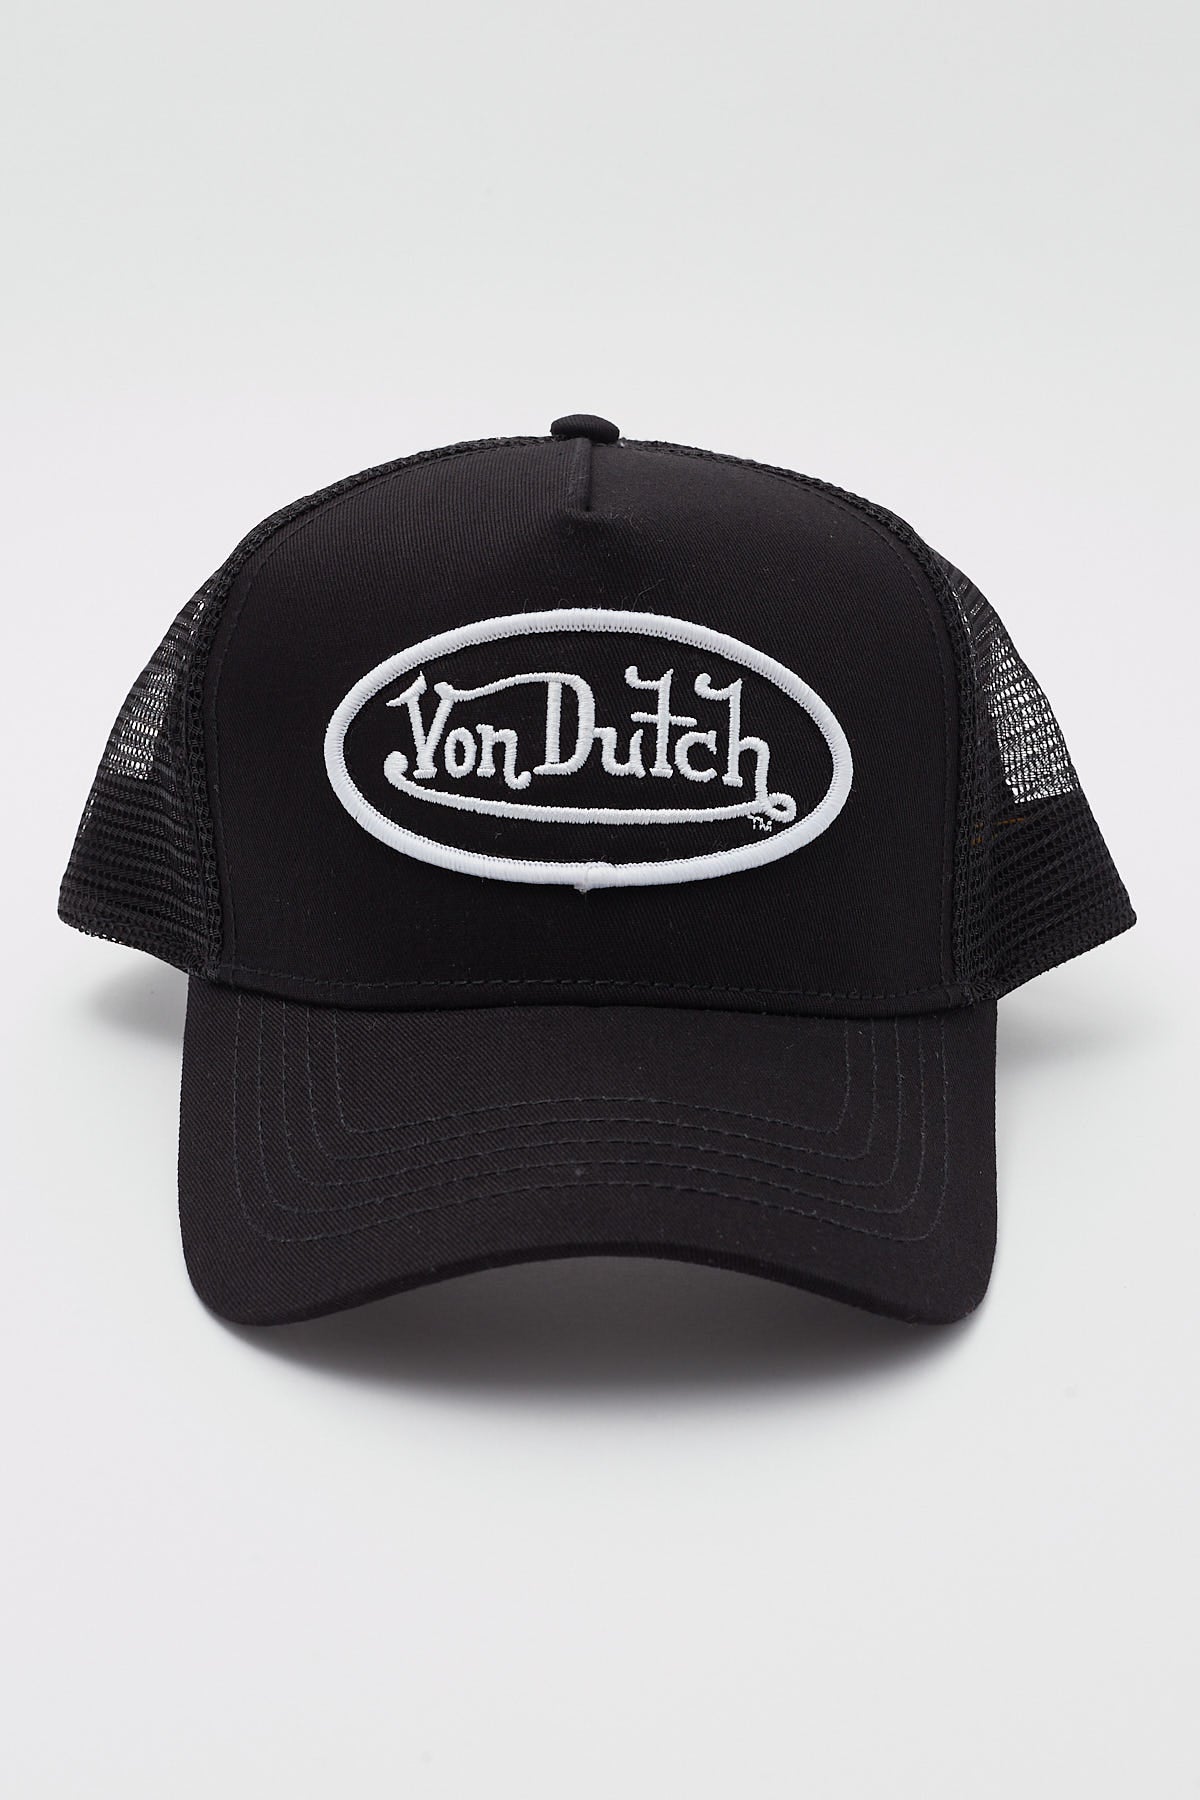 Von Dutch Classic Trucker 51 Black/White – Universal Store